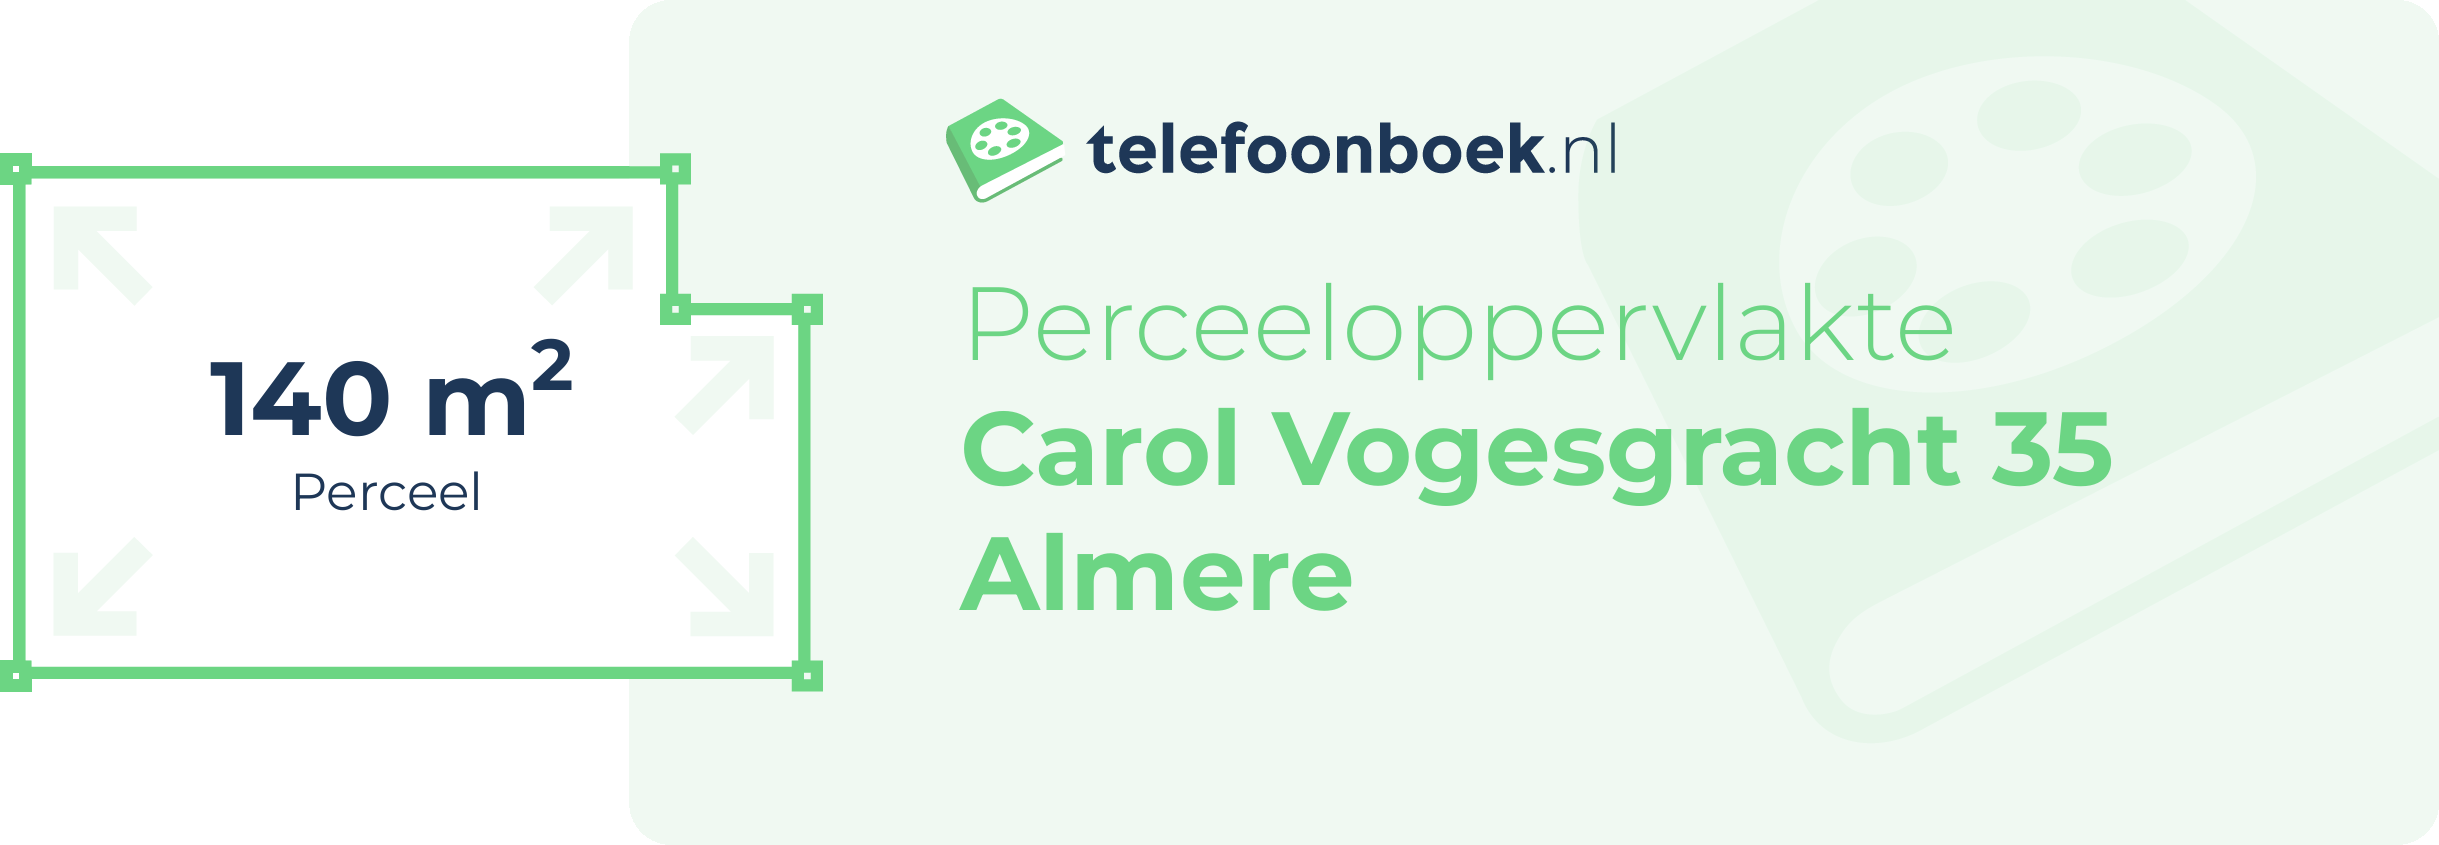 Perceeloppervlakte Carol Vogesgracht 35 Almere